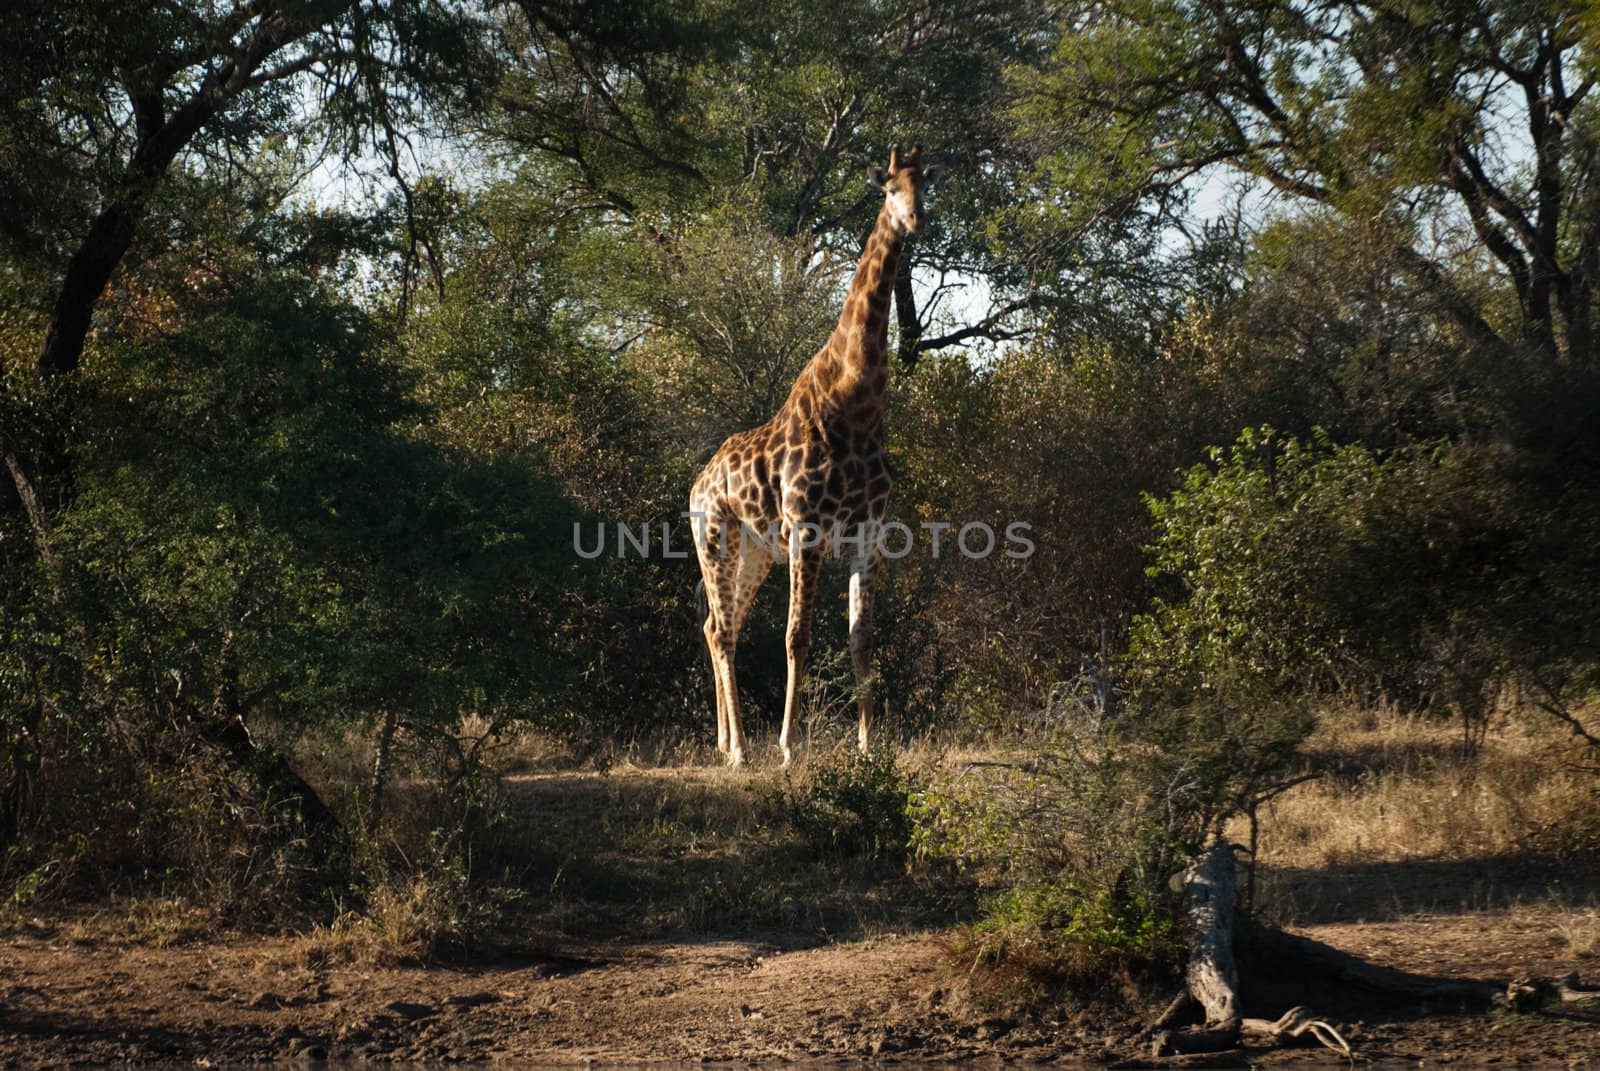 Single GIRAFFE (Giraffa camelopardalis) standing, South Africa